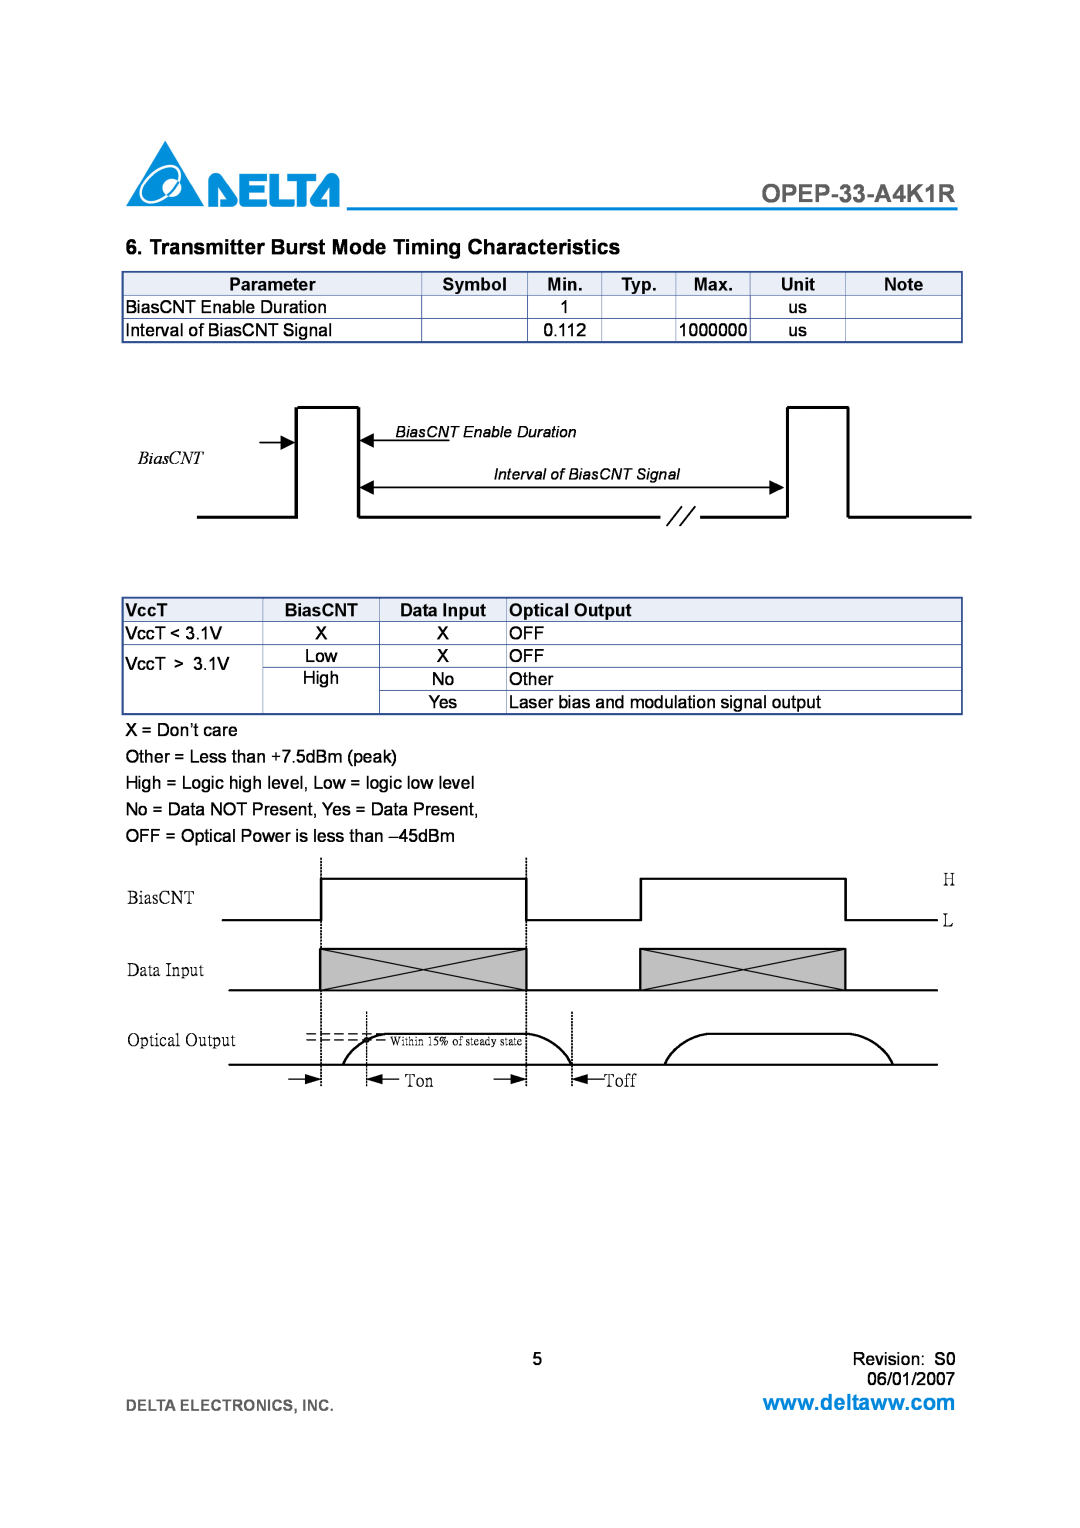 Delta Electronics OPEP-33-A4K1R manual Transmitter Burst Mode Timing Characteristics, BiasCNT 